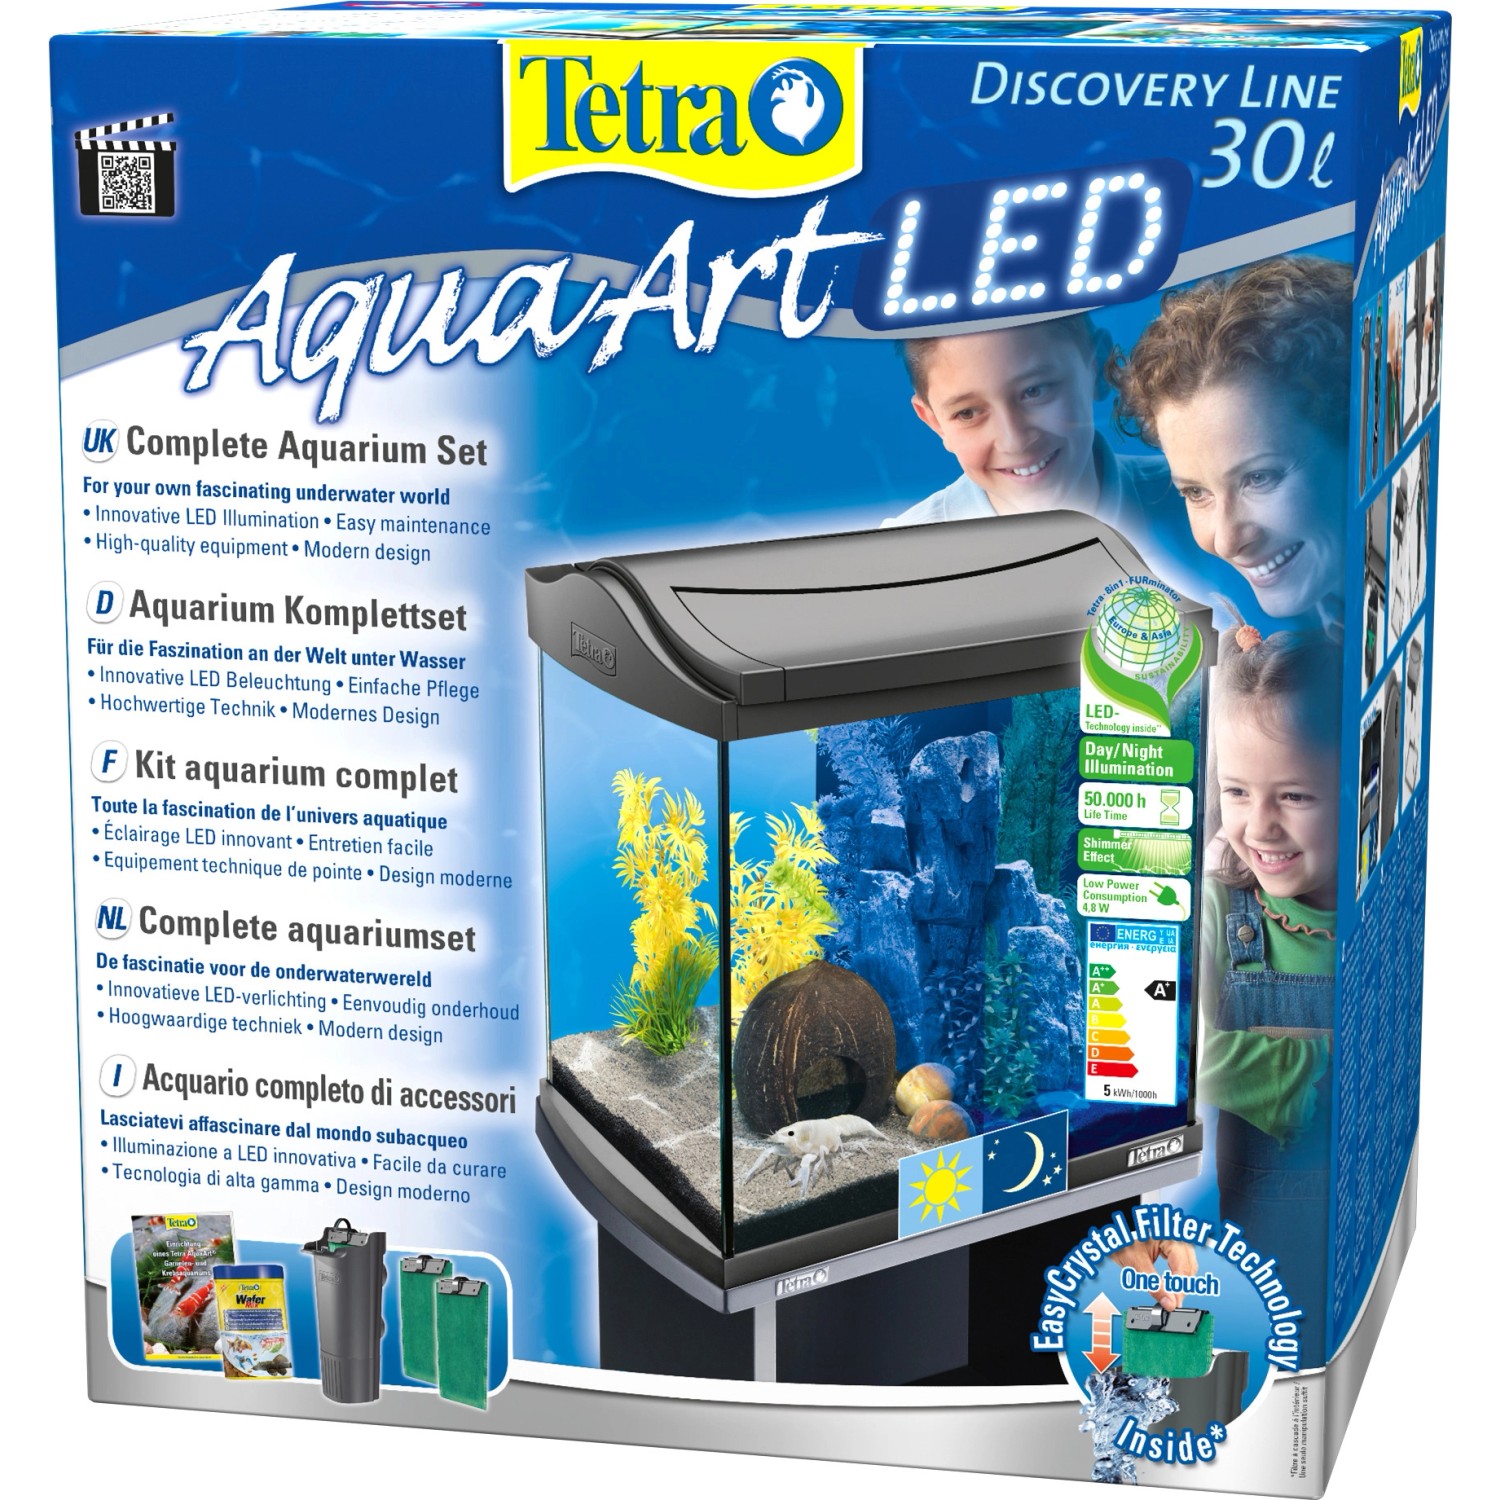 Tetra Aquarium-Set Discovery OBI bei Anthrazit l kaufen 30 AquaArt LED Line